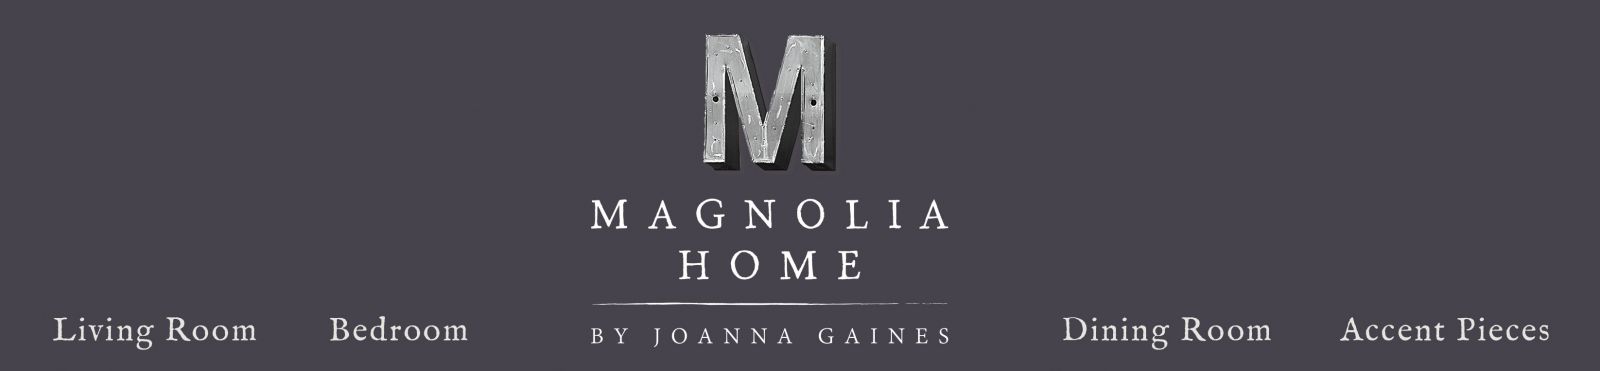 Magnolia Home